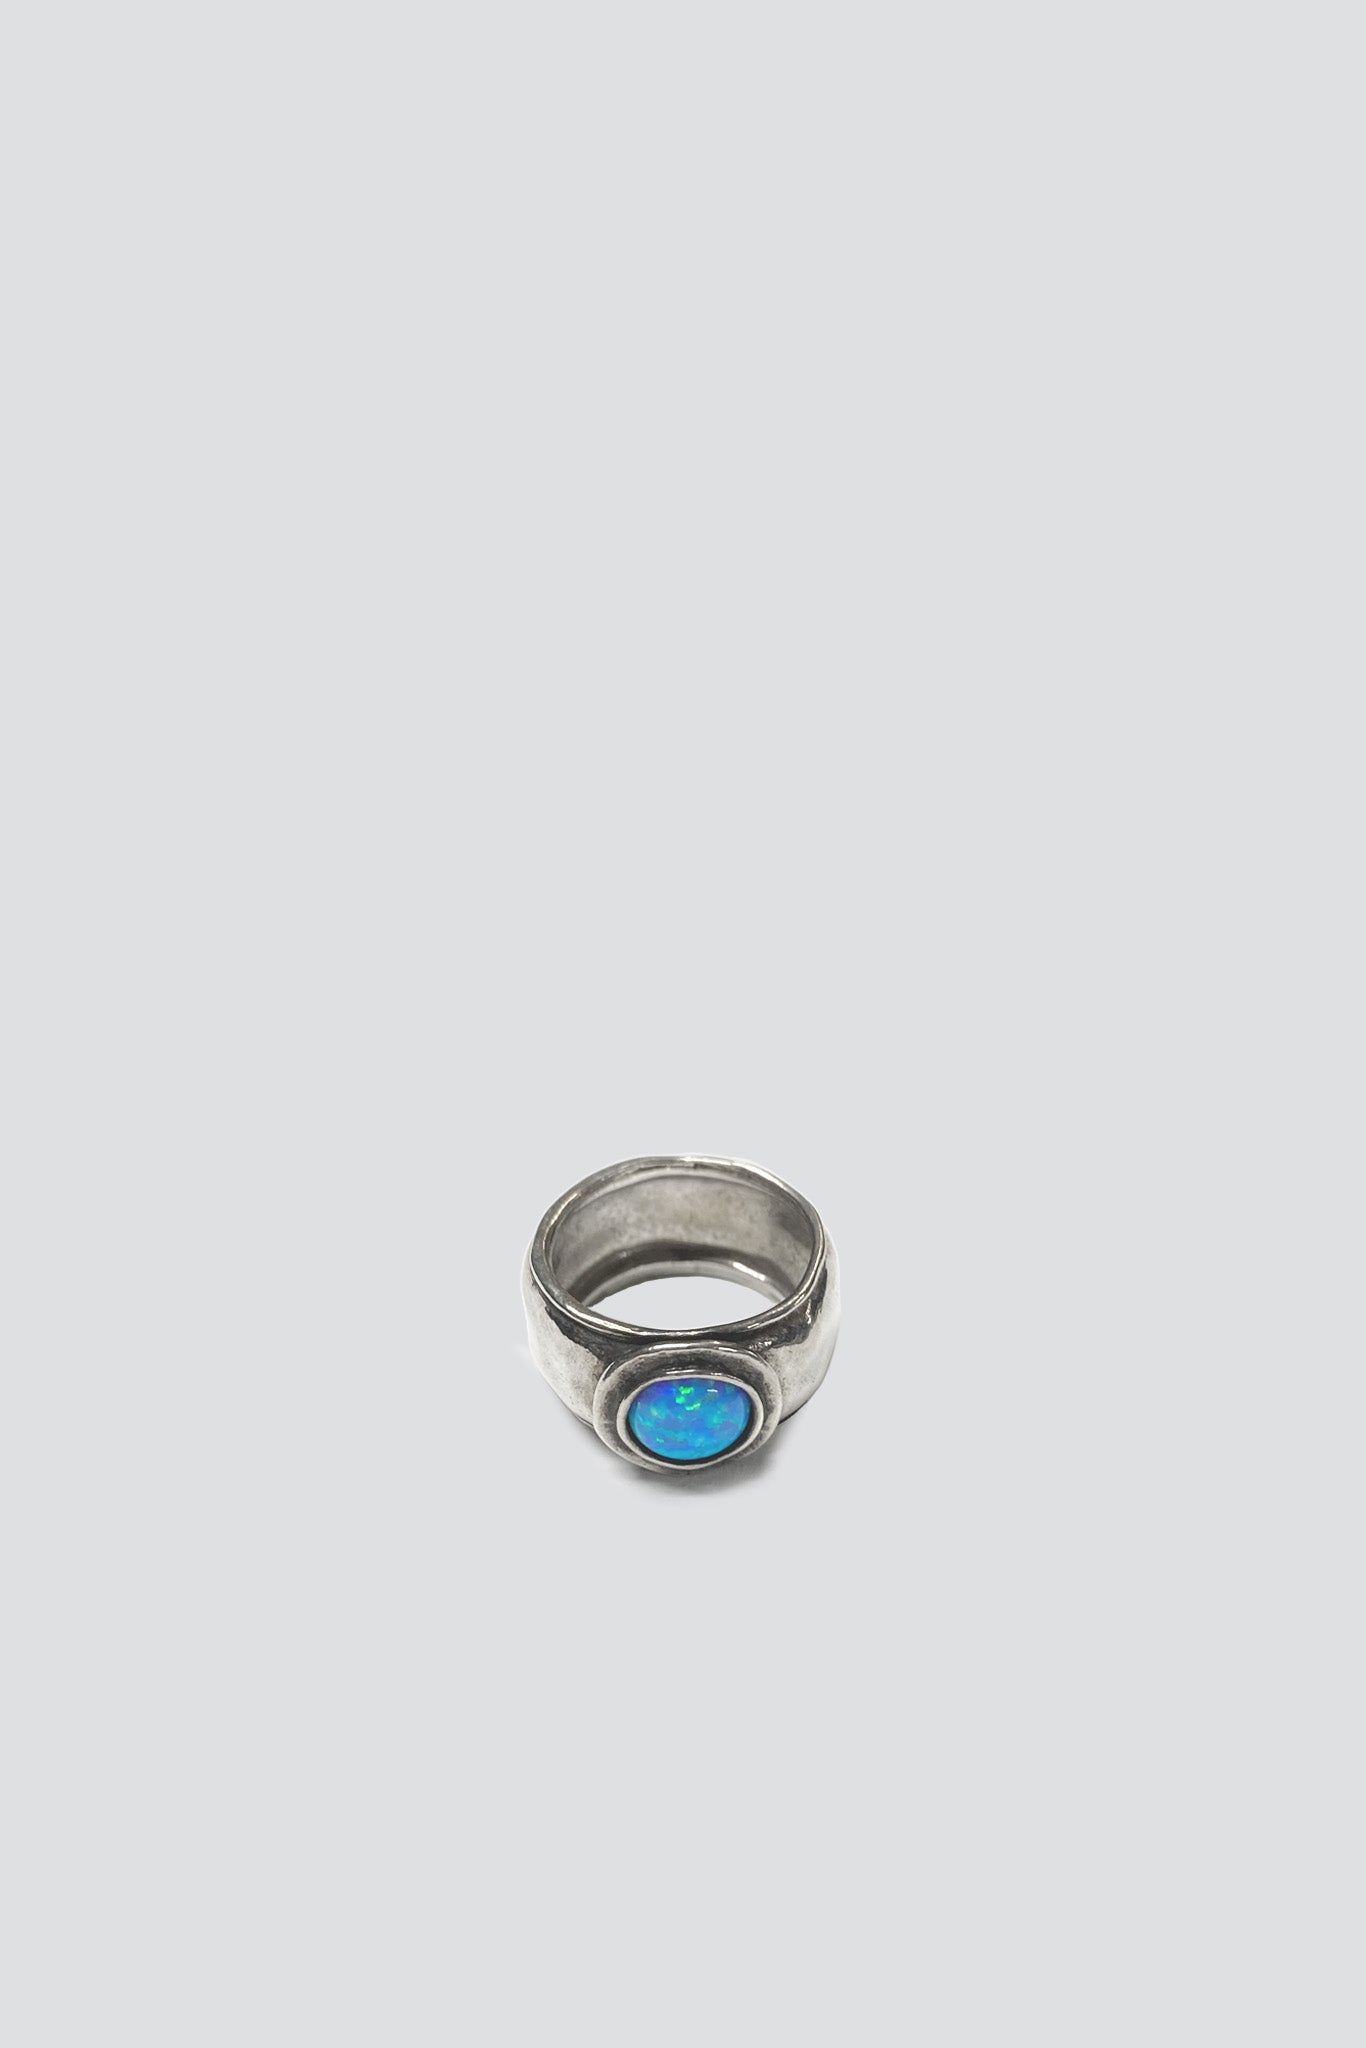 Initial Z Sterling Silver Bracelet – VINTAGE-O-RAMA LLC